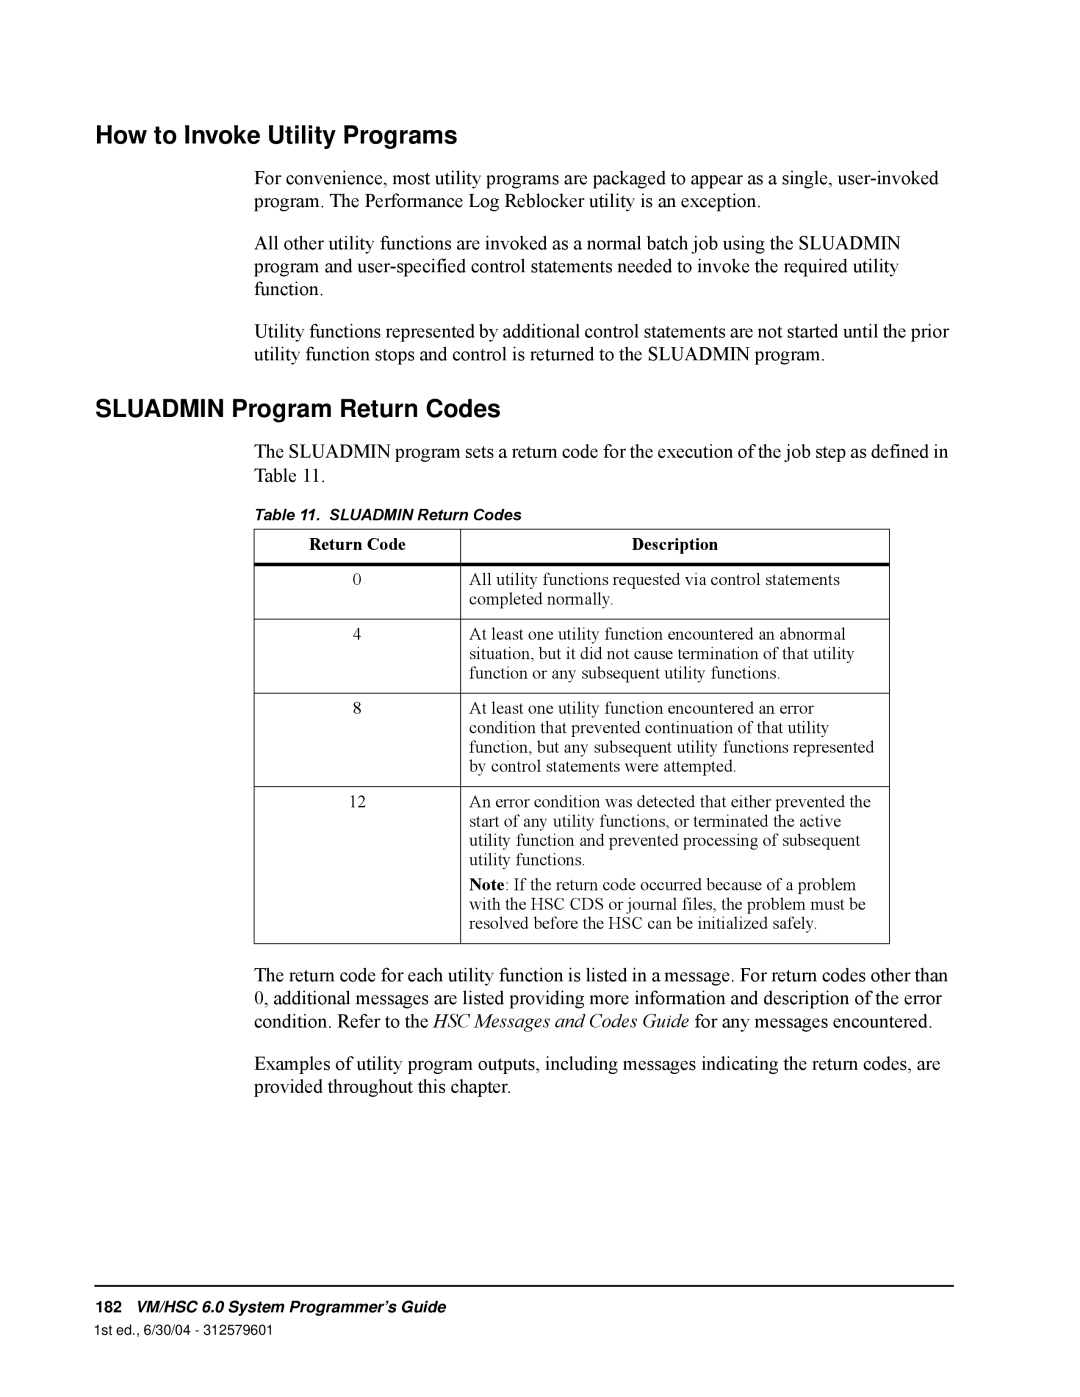 StorageTek 6 manual How to Invoke Utility Programs, SLUADMIN Program Return Codes, Description 